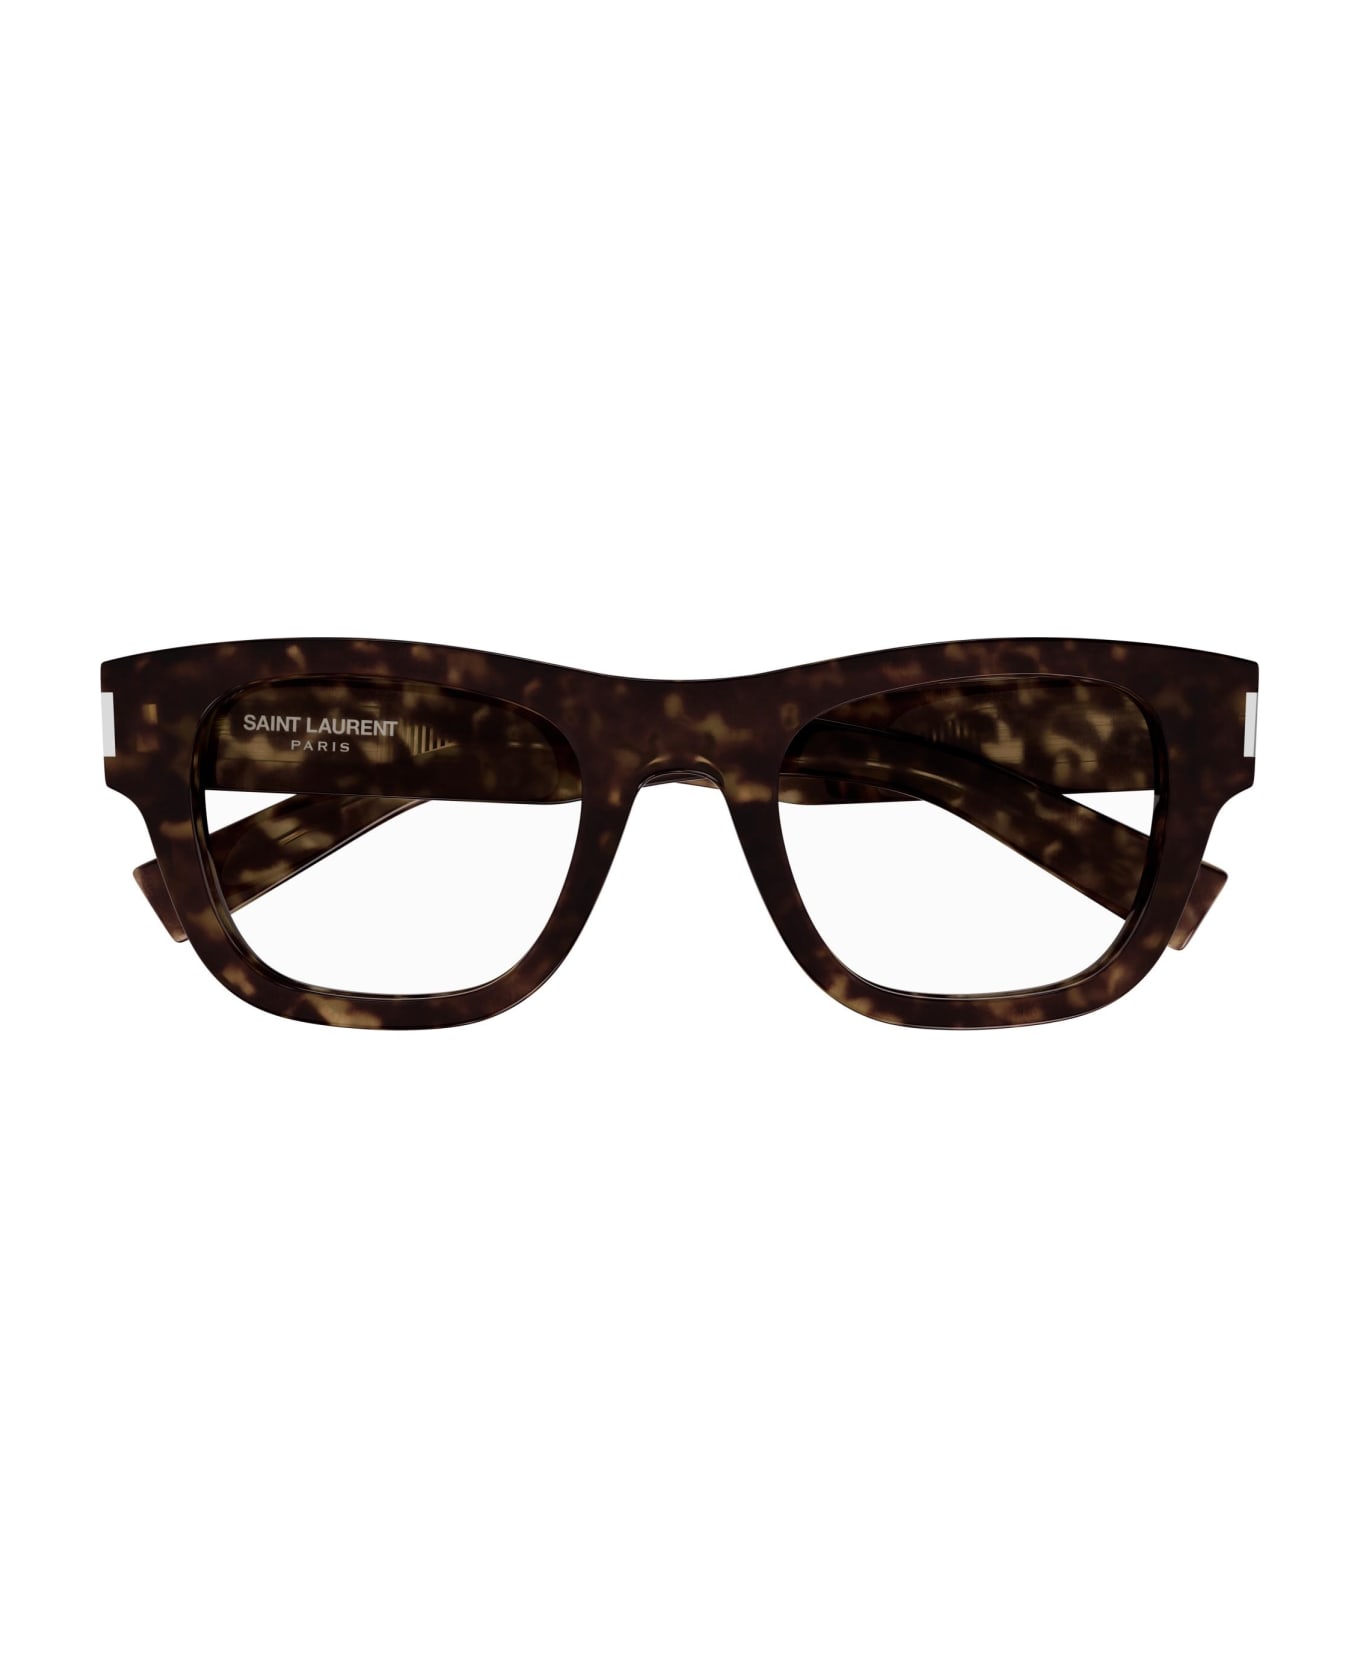 Saint Laurent Eyewear Glasses - Marrone